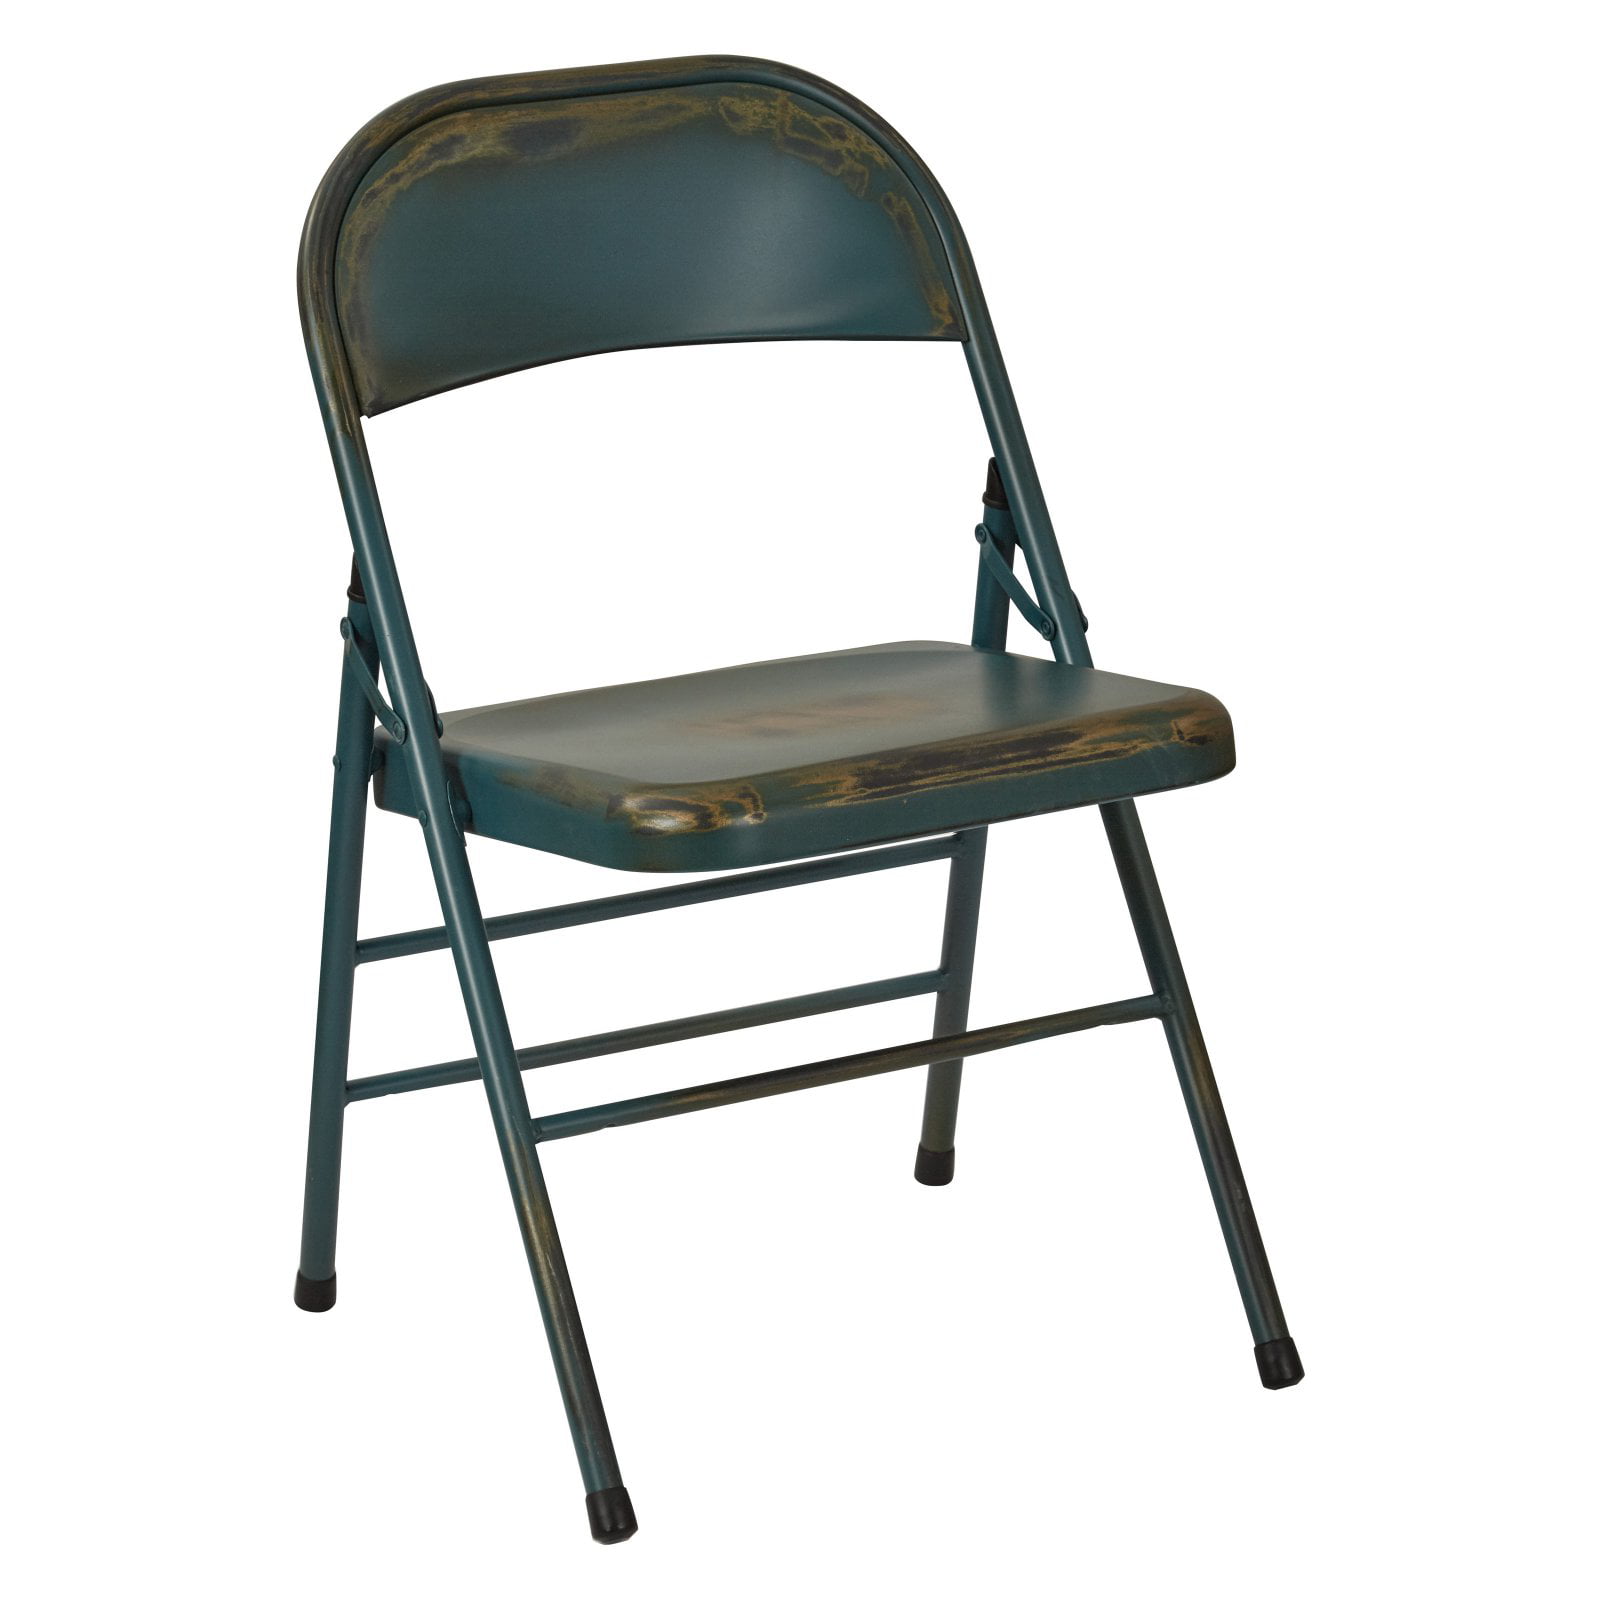 Bristow Steel Folding Chair (2-Pack) - Walmart.com - Walmart.com